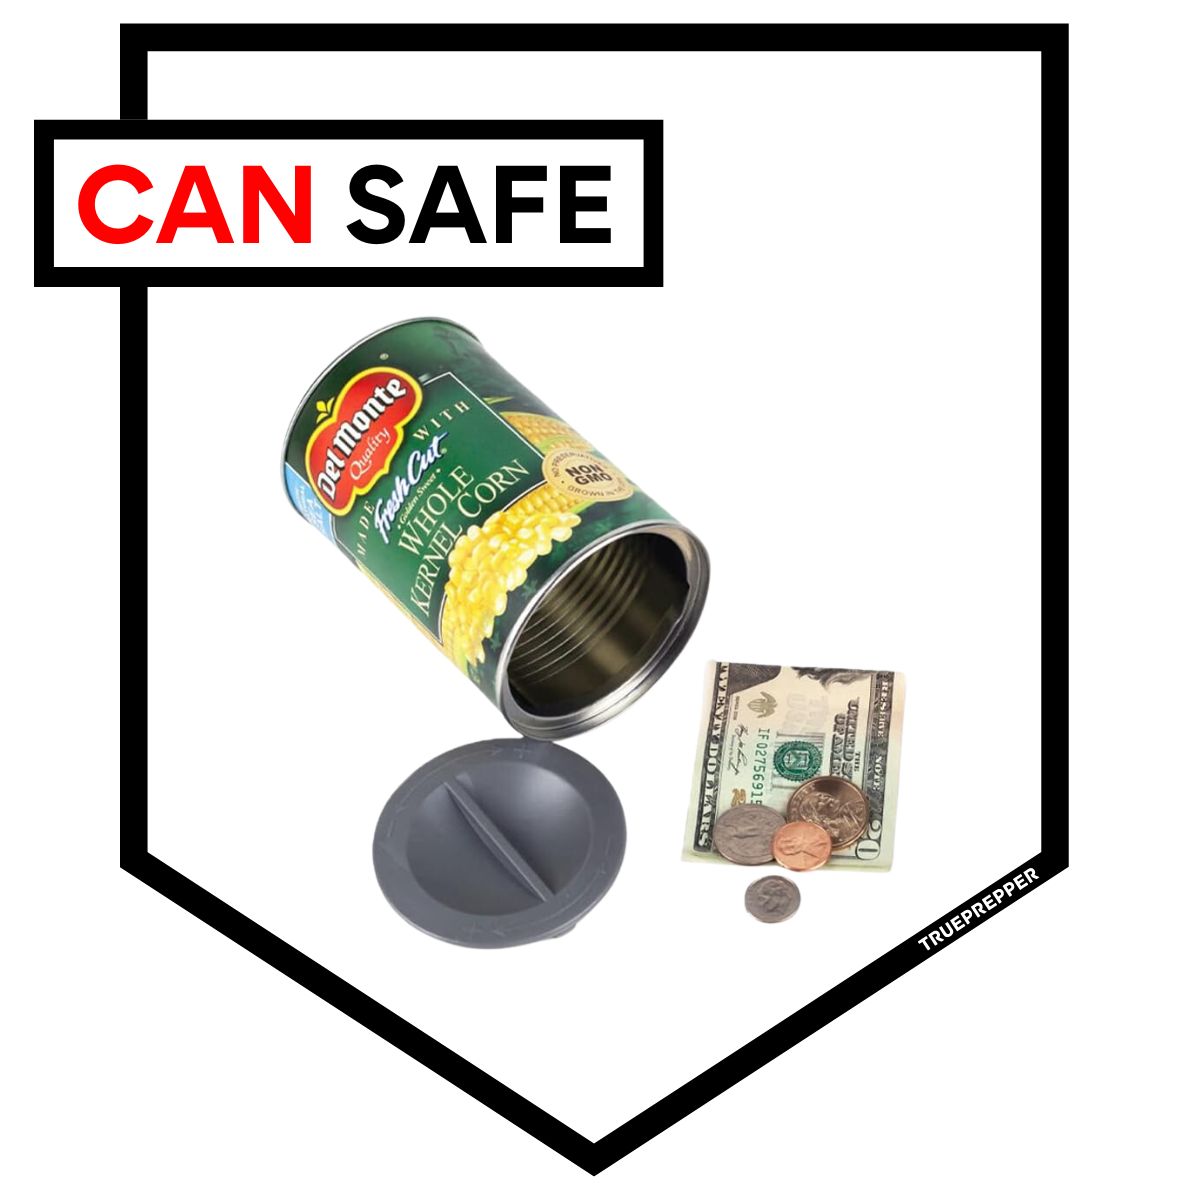 Canned Food Safe